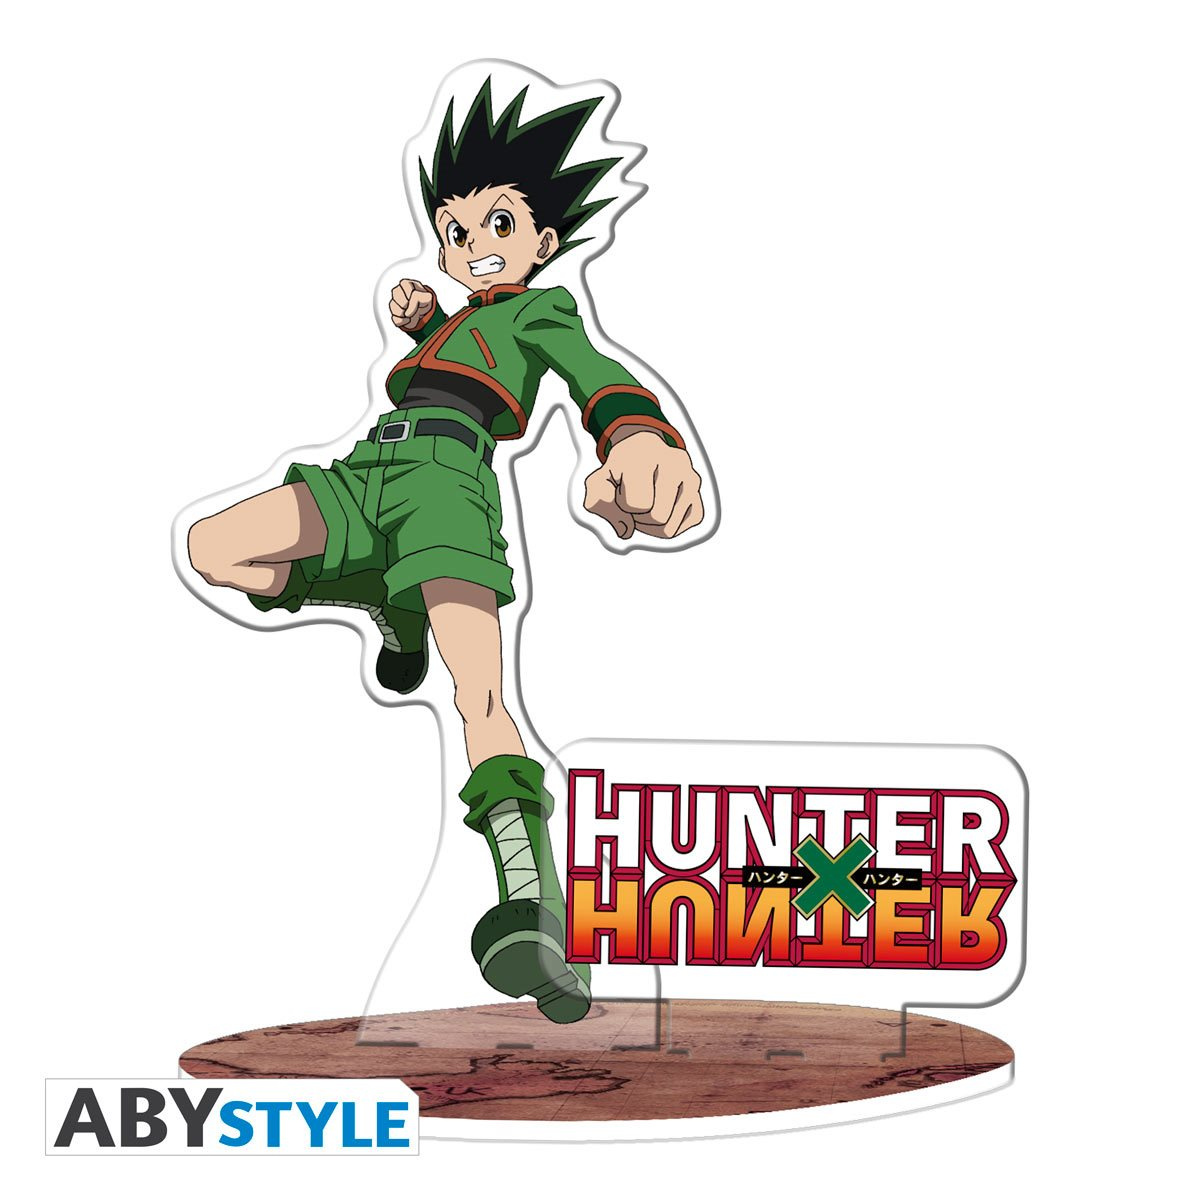 Shop Hunter x Hunter Gon Freecss ACRYL Figure anime